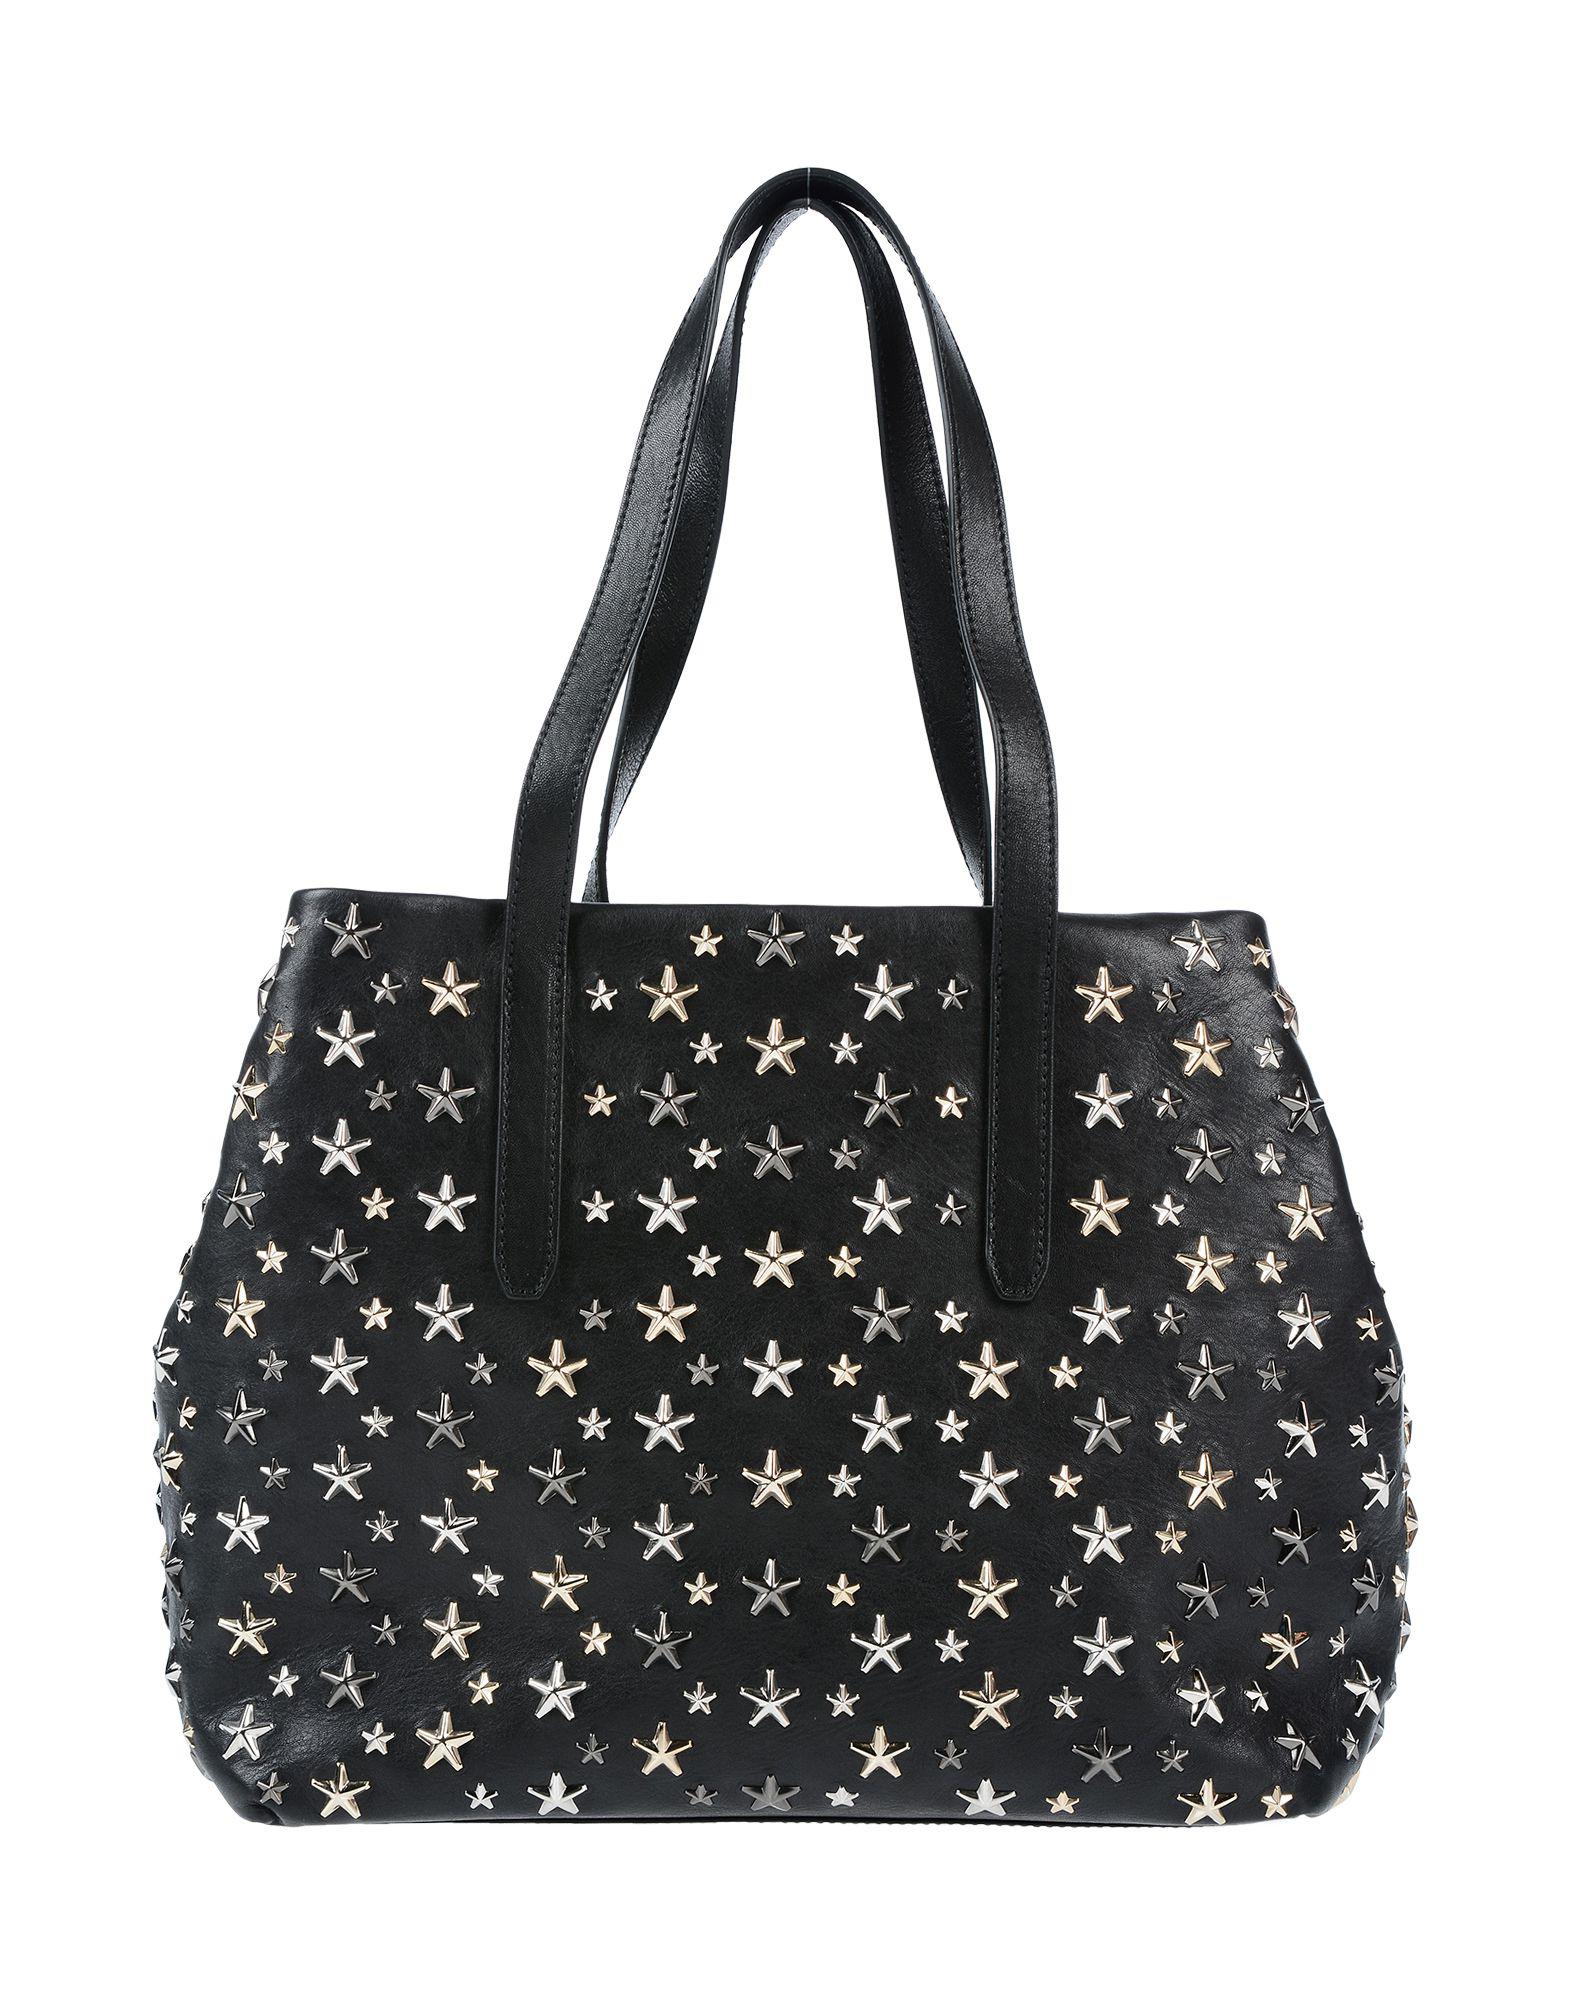 Jimmy Choo Shopping Bag With Stars Sofia M in Black - Lyst